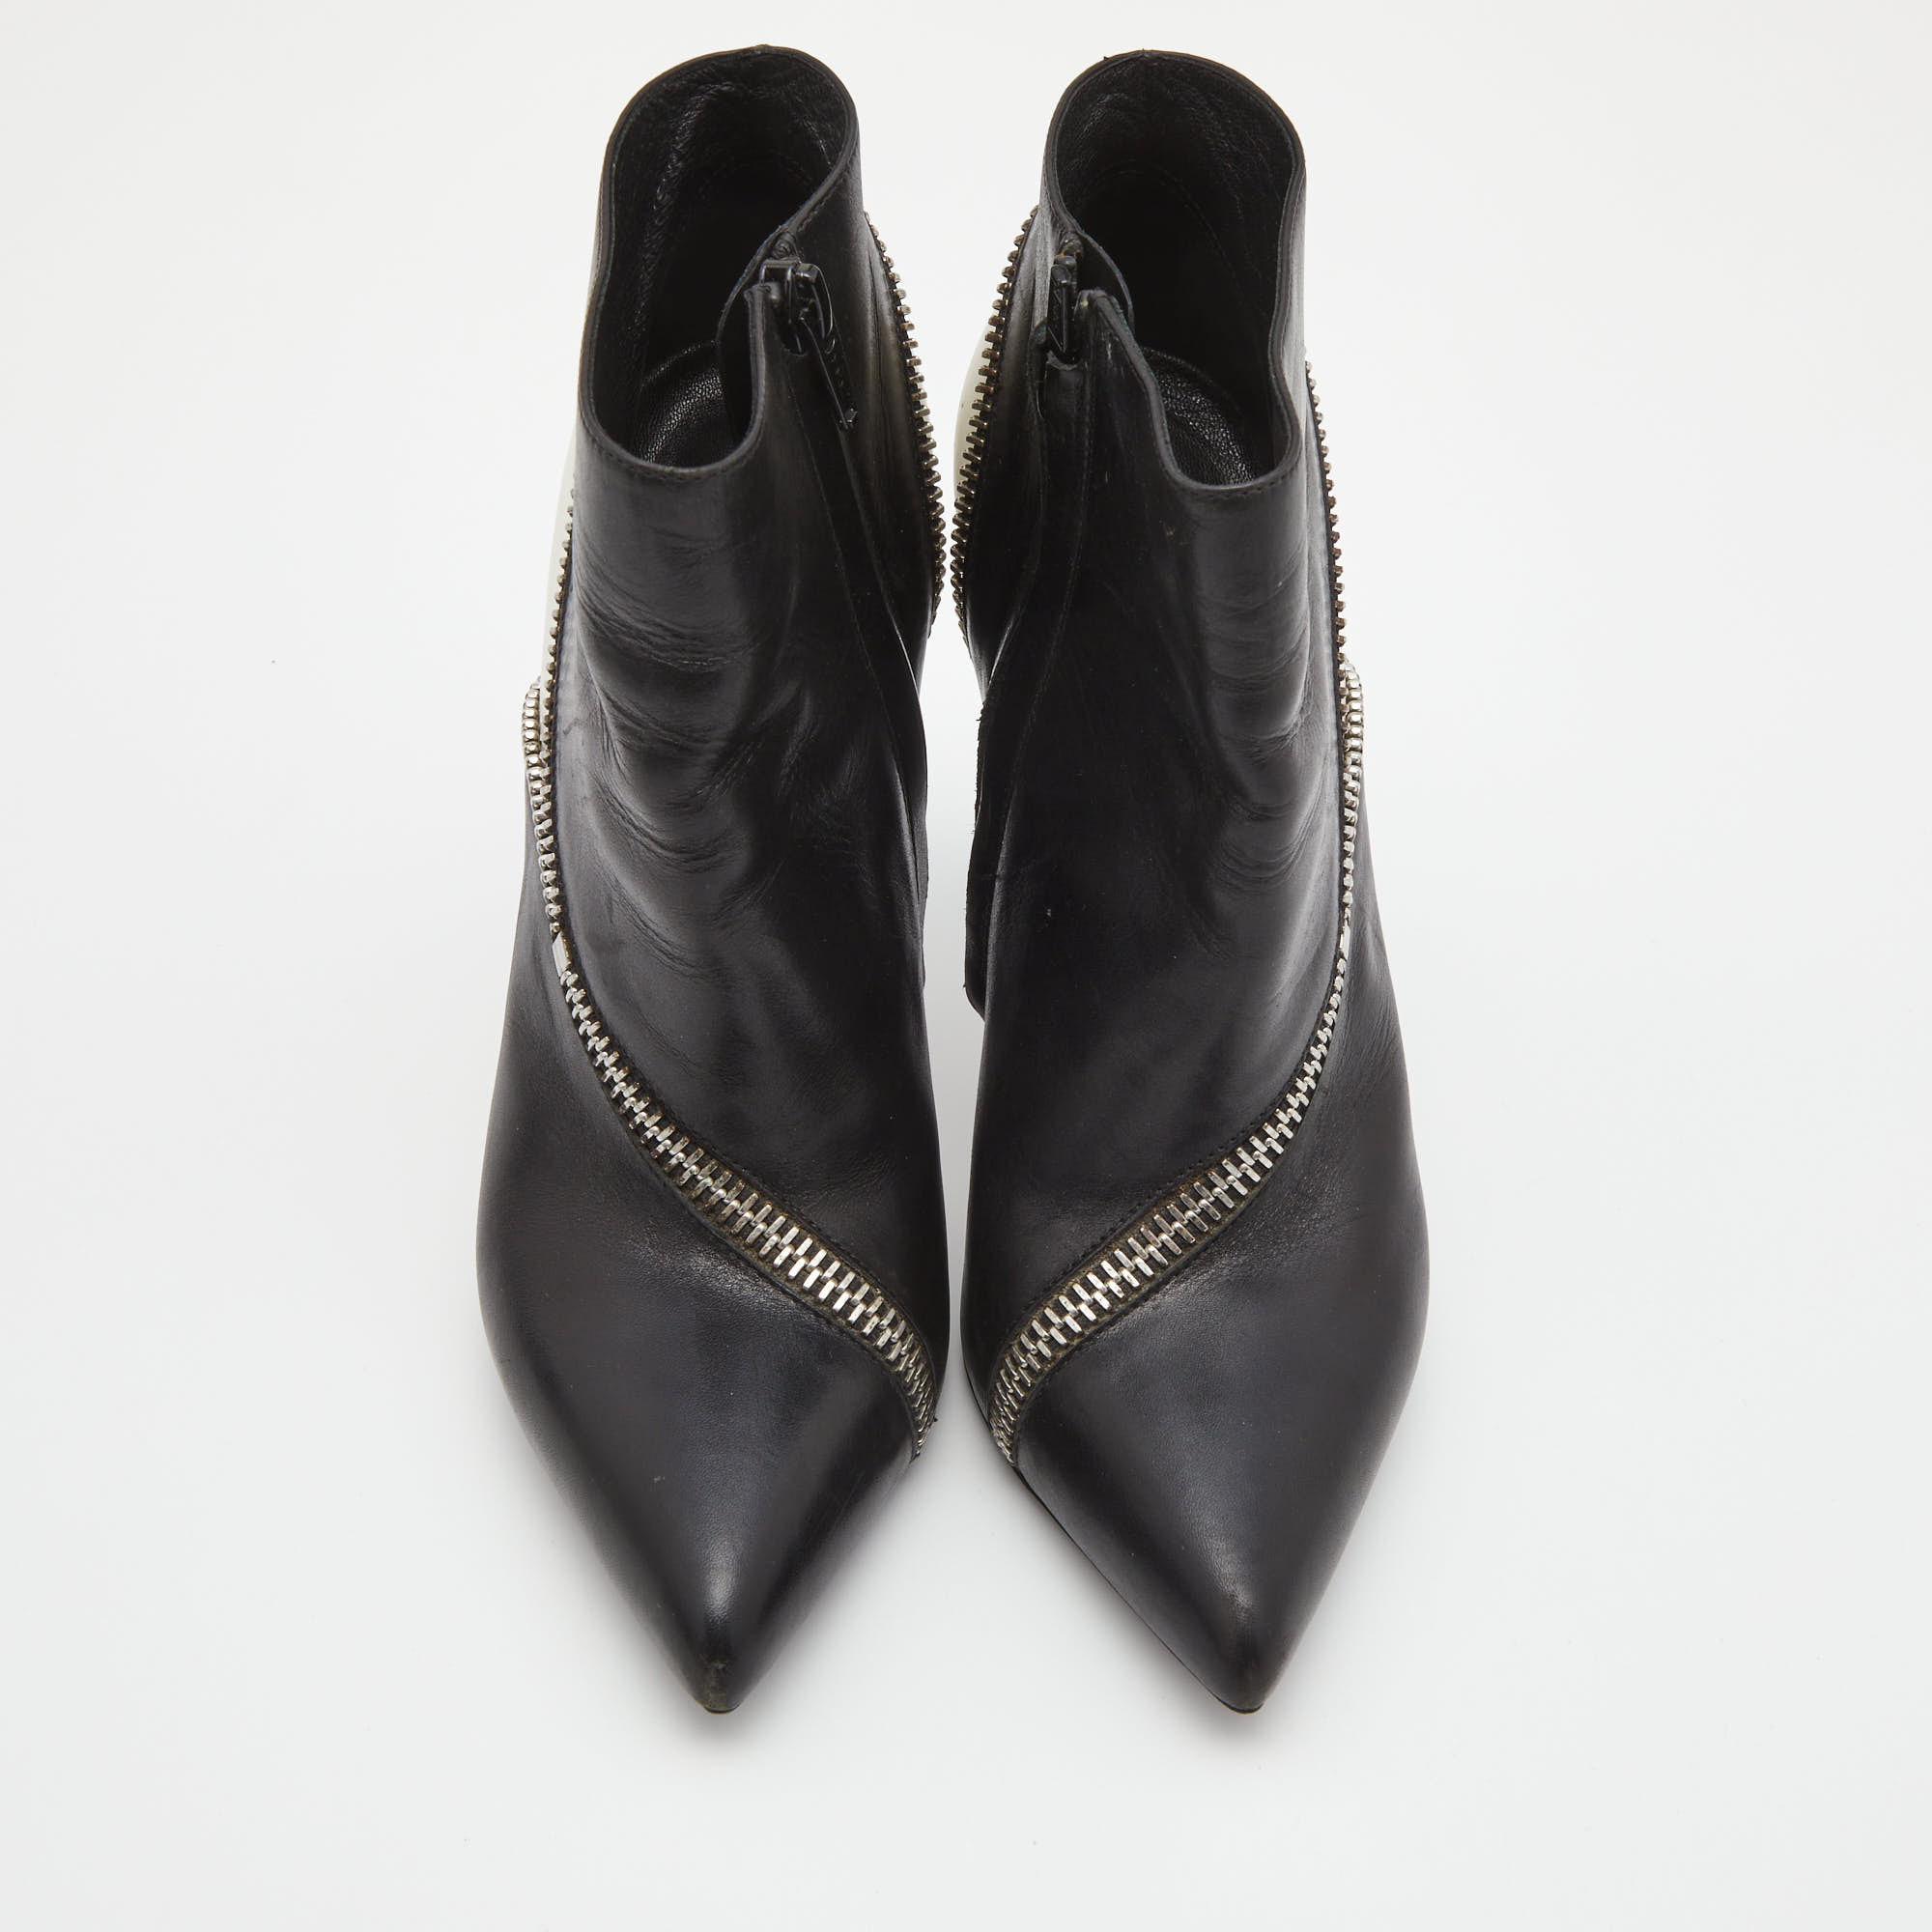 Saint Laurent Black/White Leather Color Block Ankle Booties Size 36